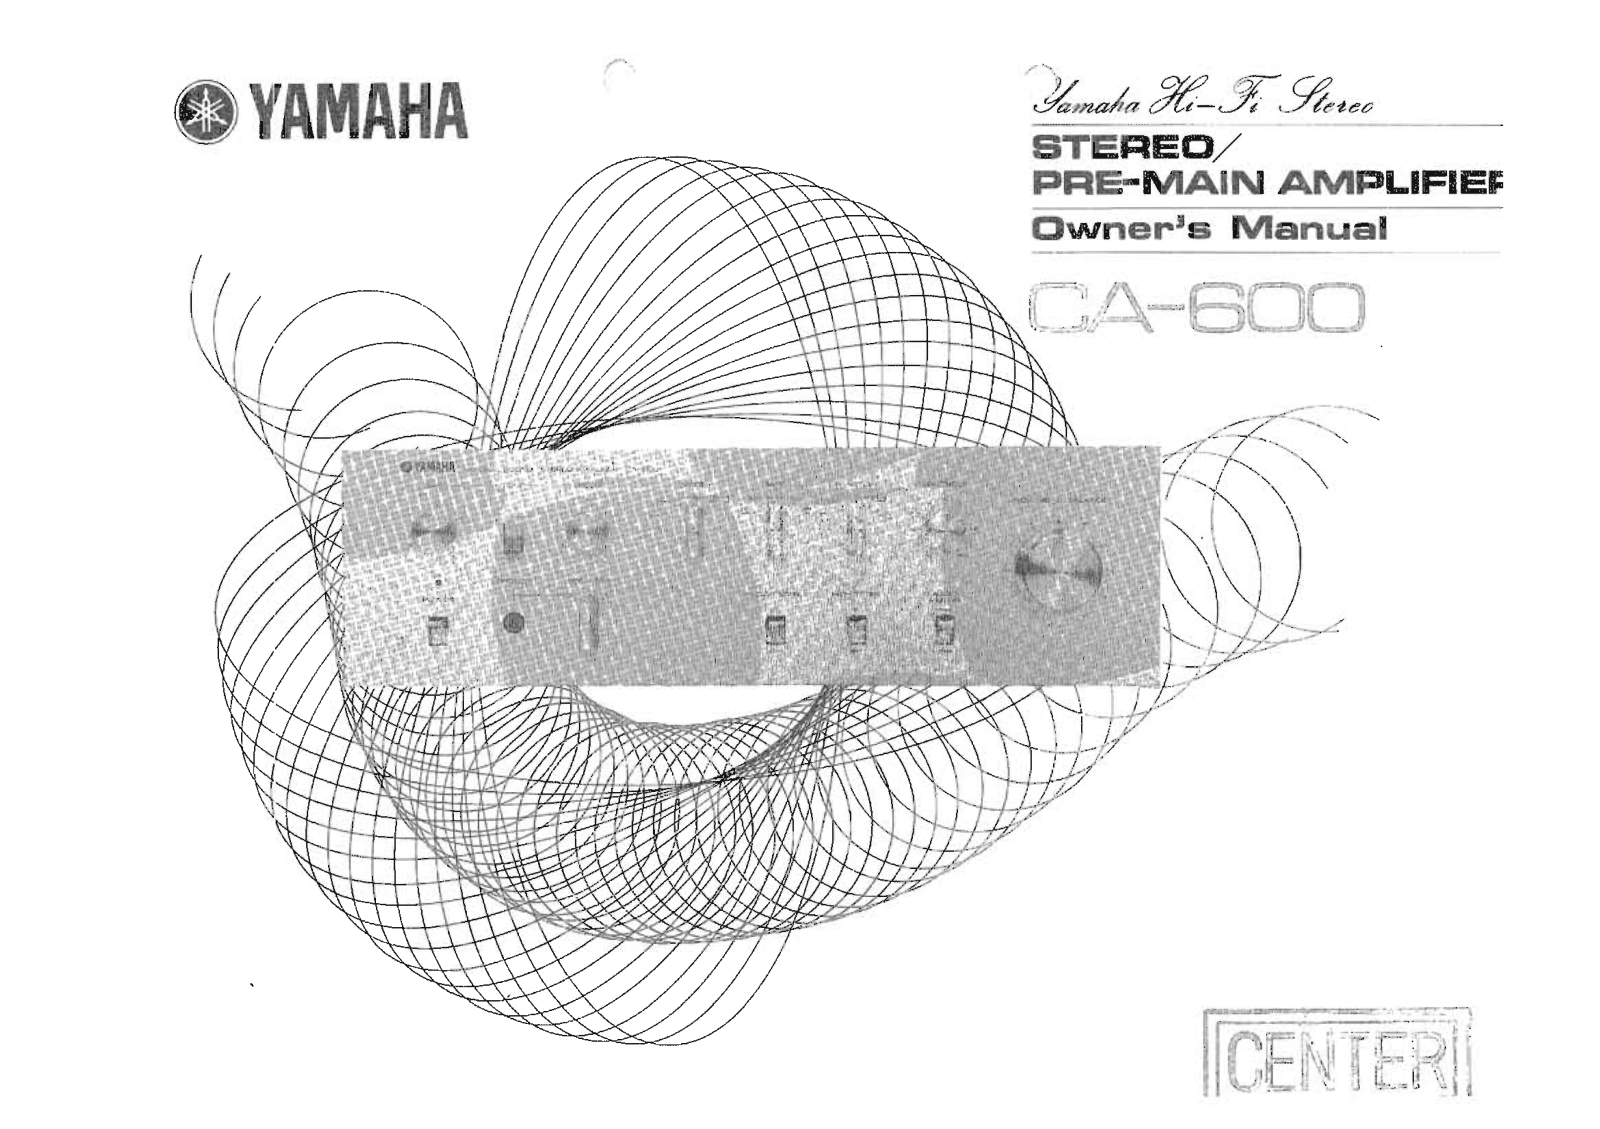 Yamaha CA-600 Owners Manual